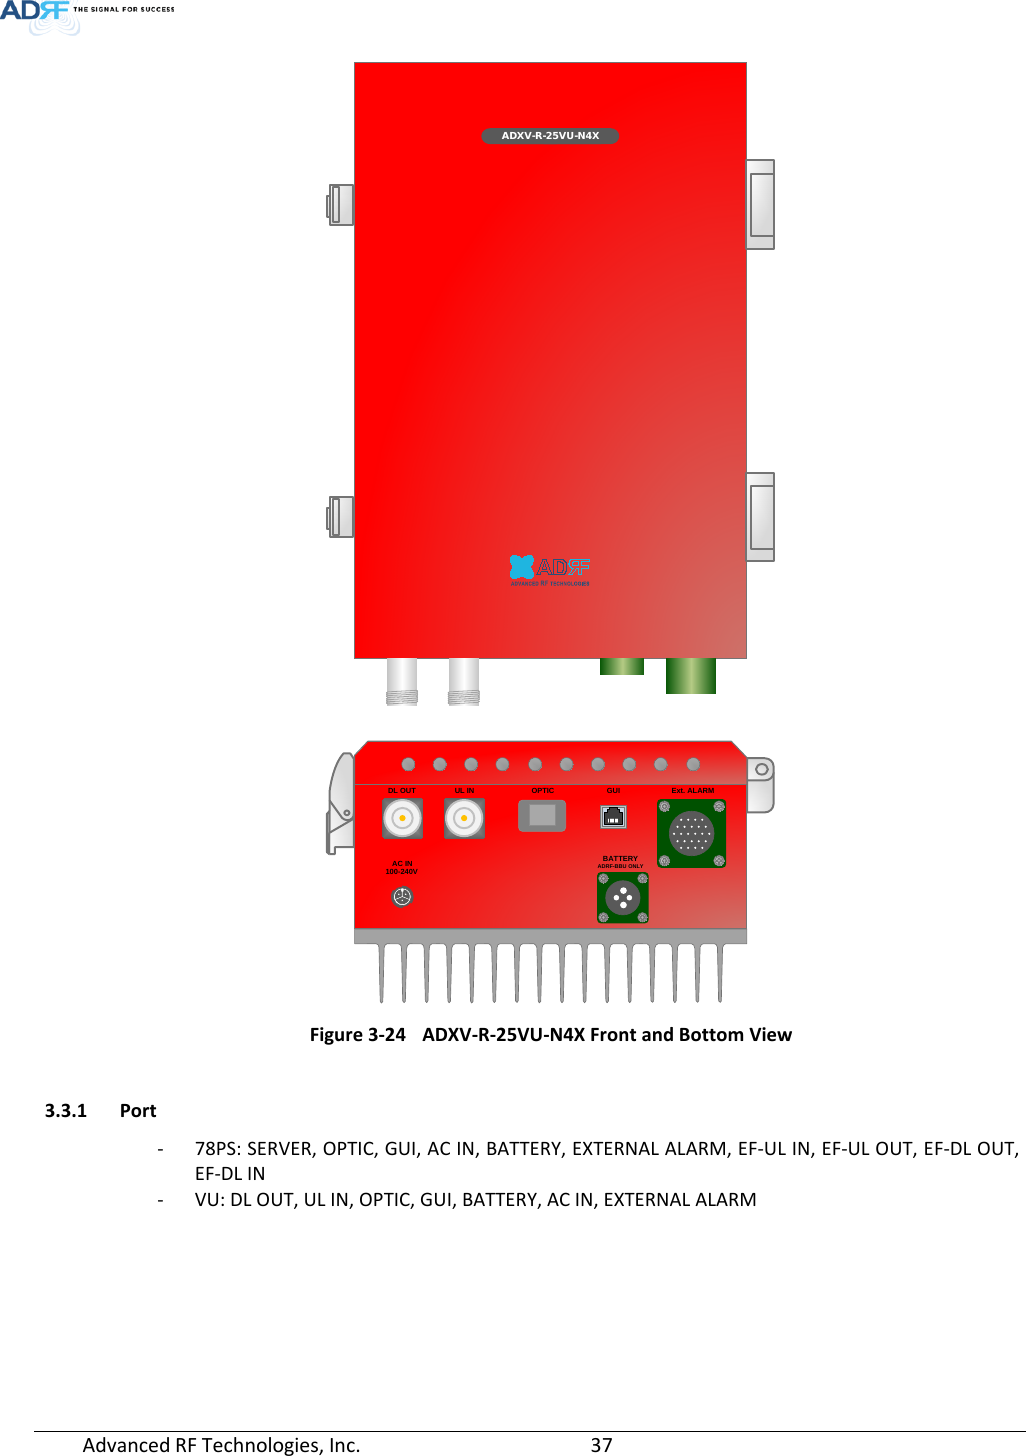 Page 37 of ADRF KOREA ADXV-R-336 DAS (Distributed Antenna System) User Manual ADXV DAS